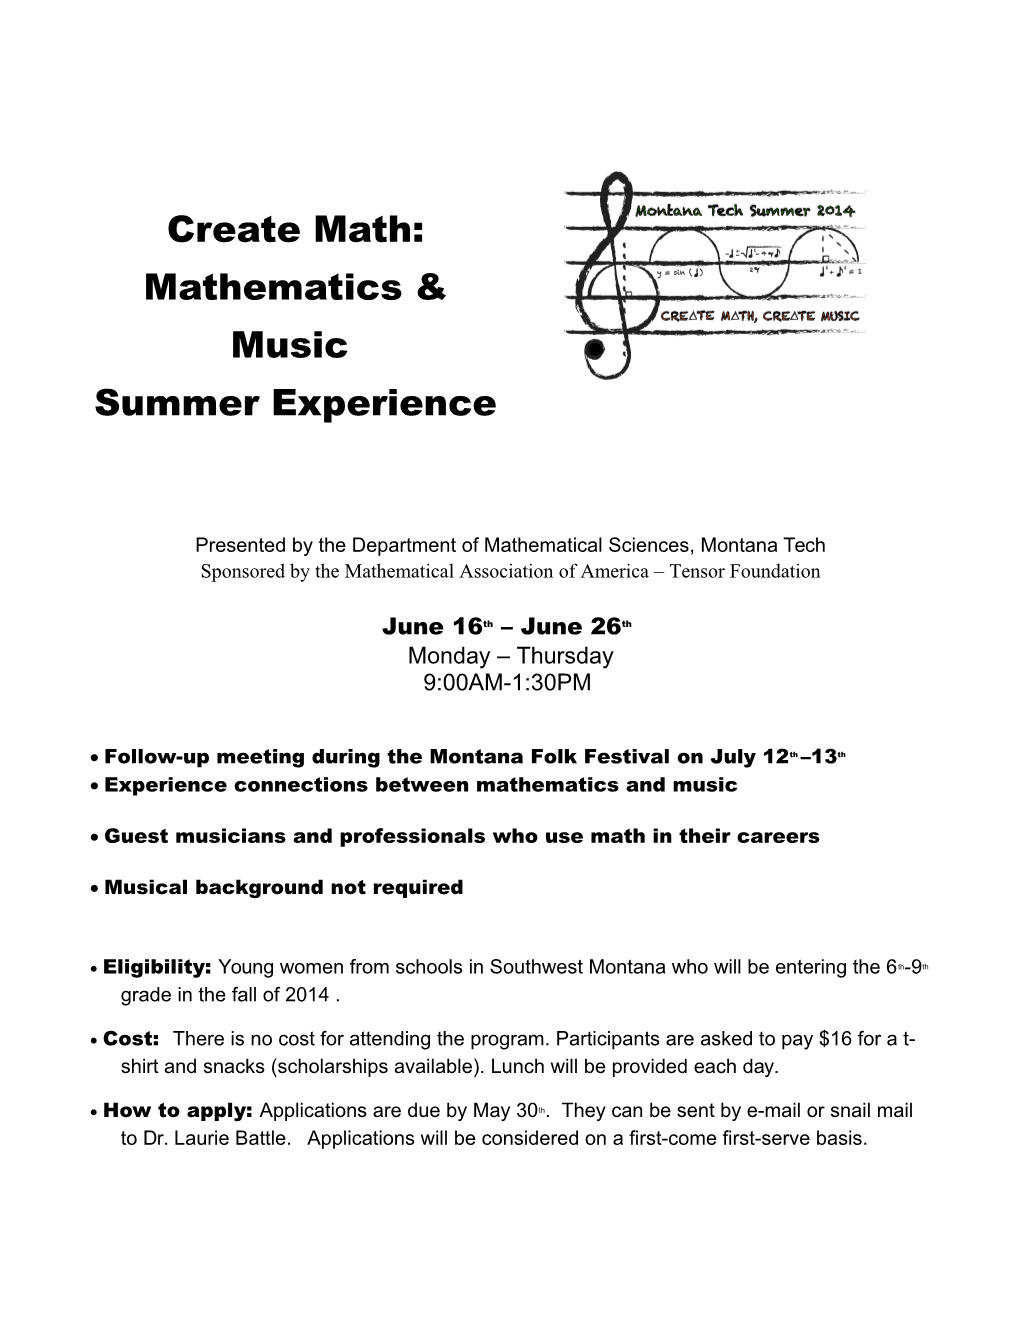 Create Math Application-Summer 2014